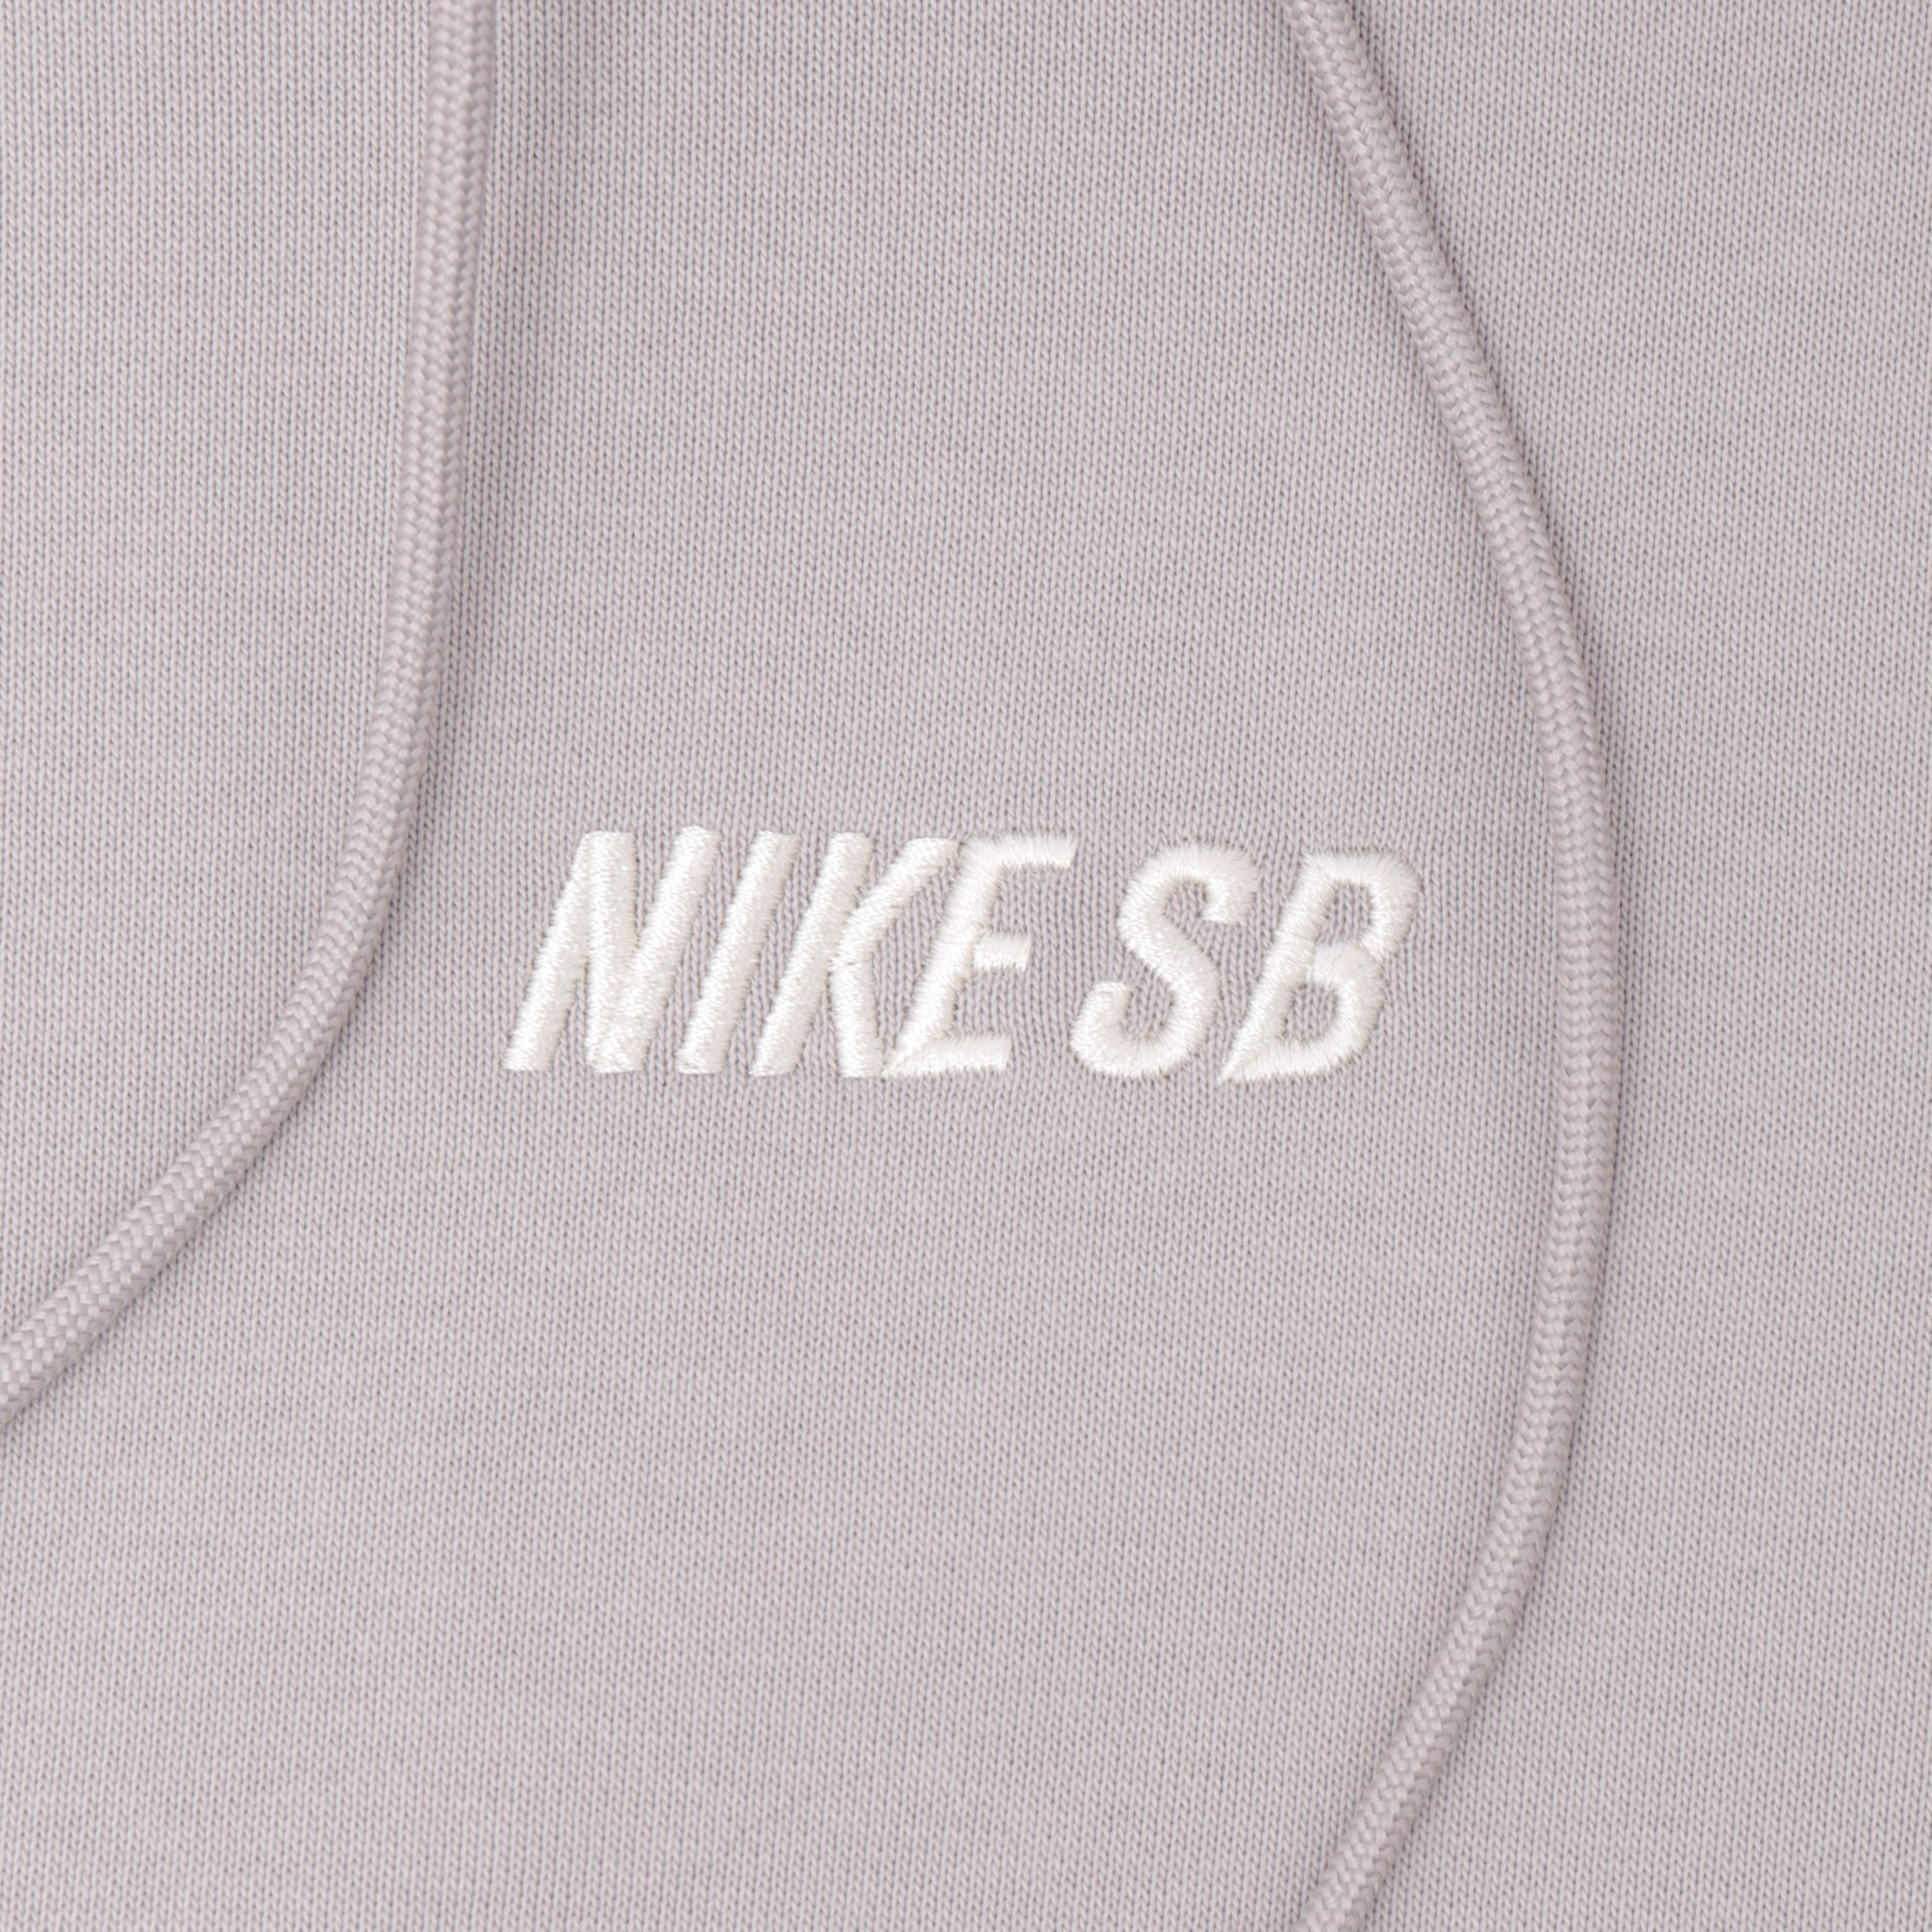 Nike SB Pullover Hood Lt Iron Ore / Coconut Milk